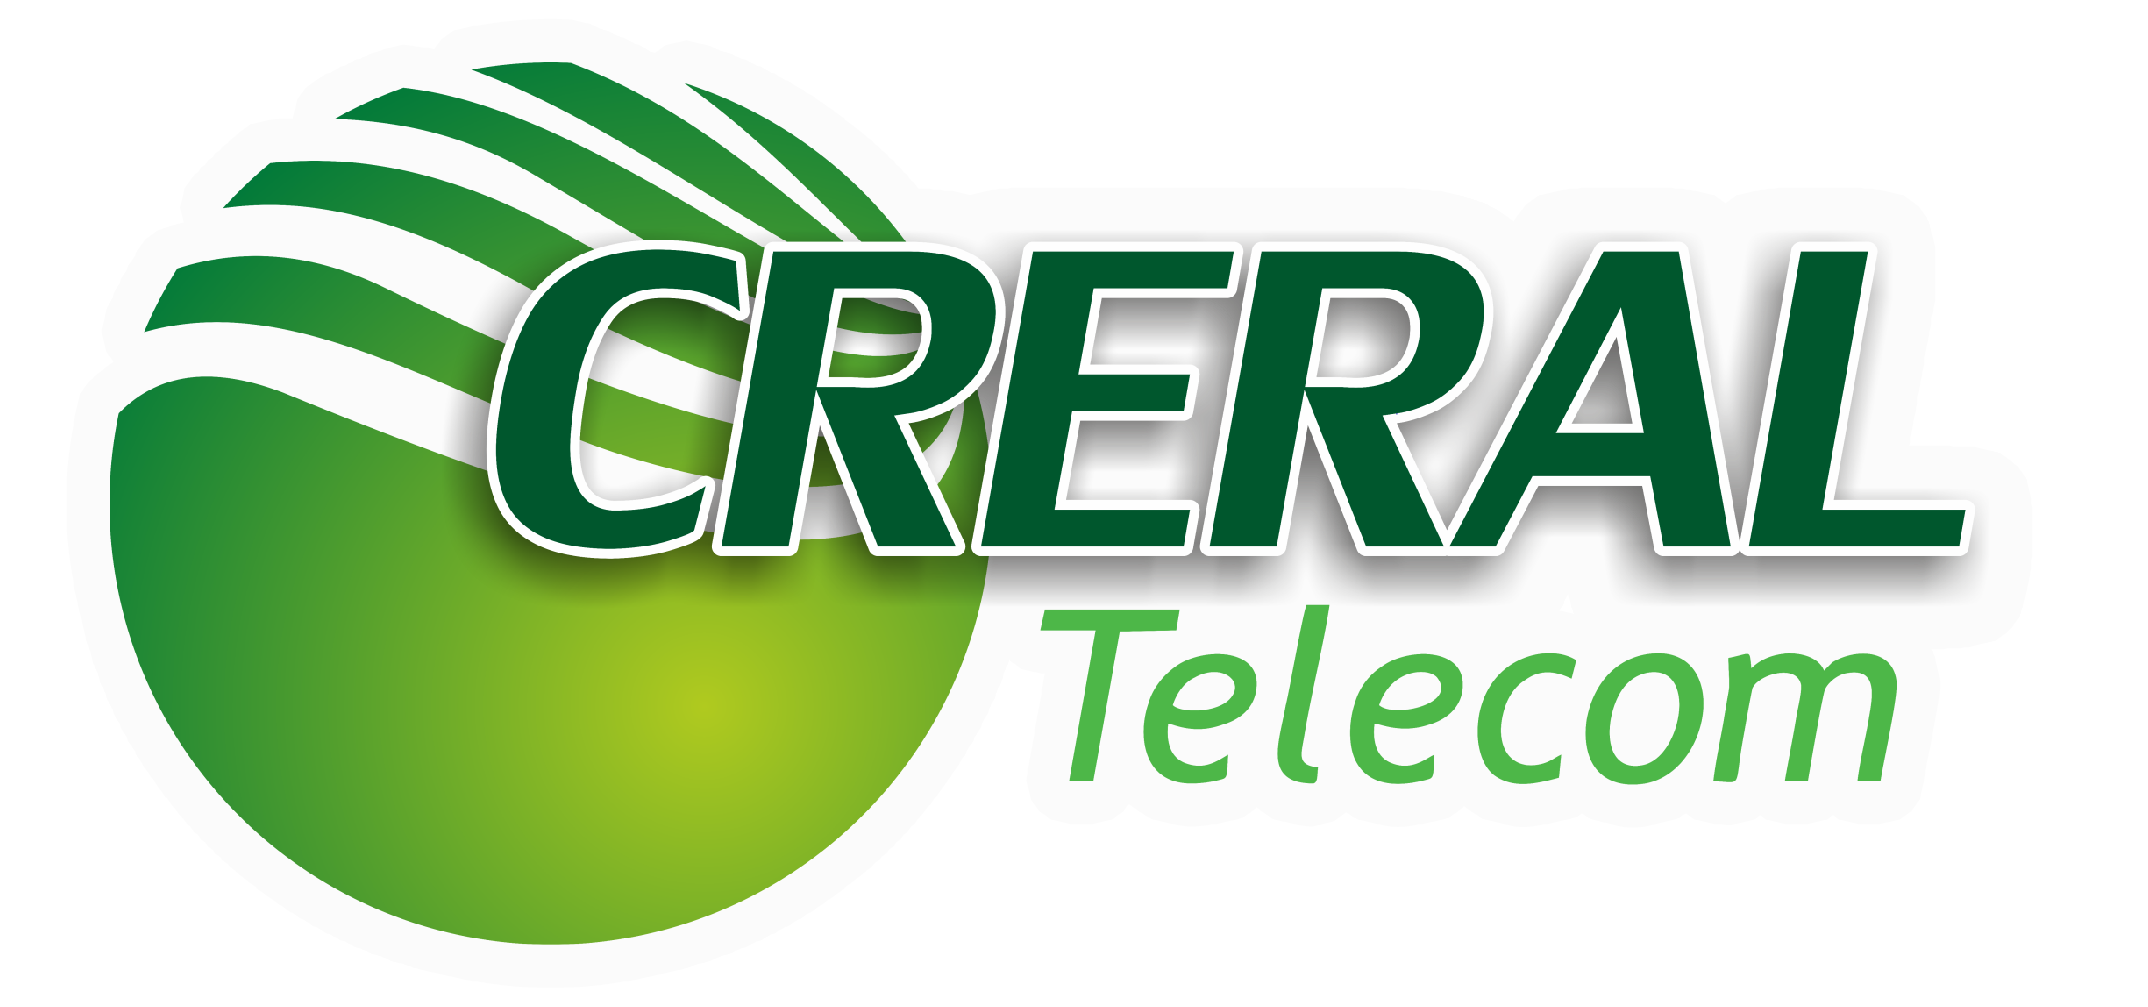 Creral Telecom passa a atender exclusivamente associados da cooperativa